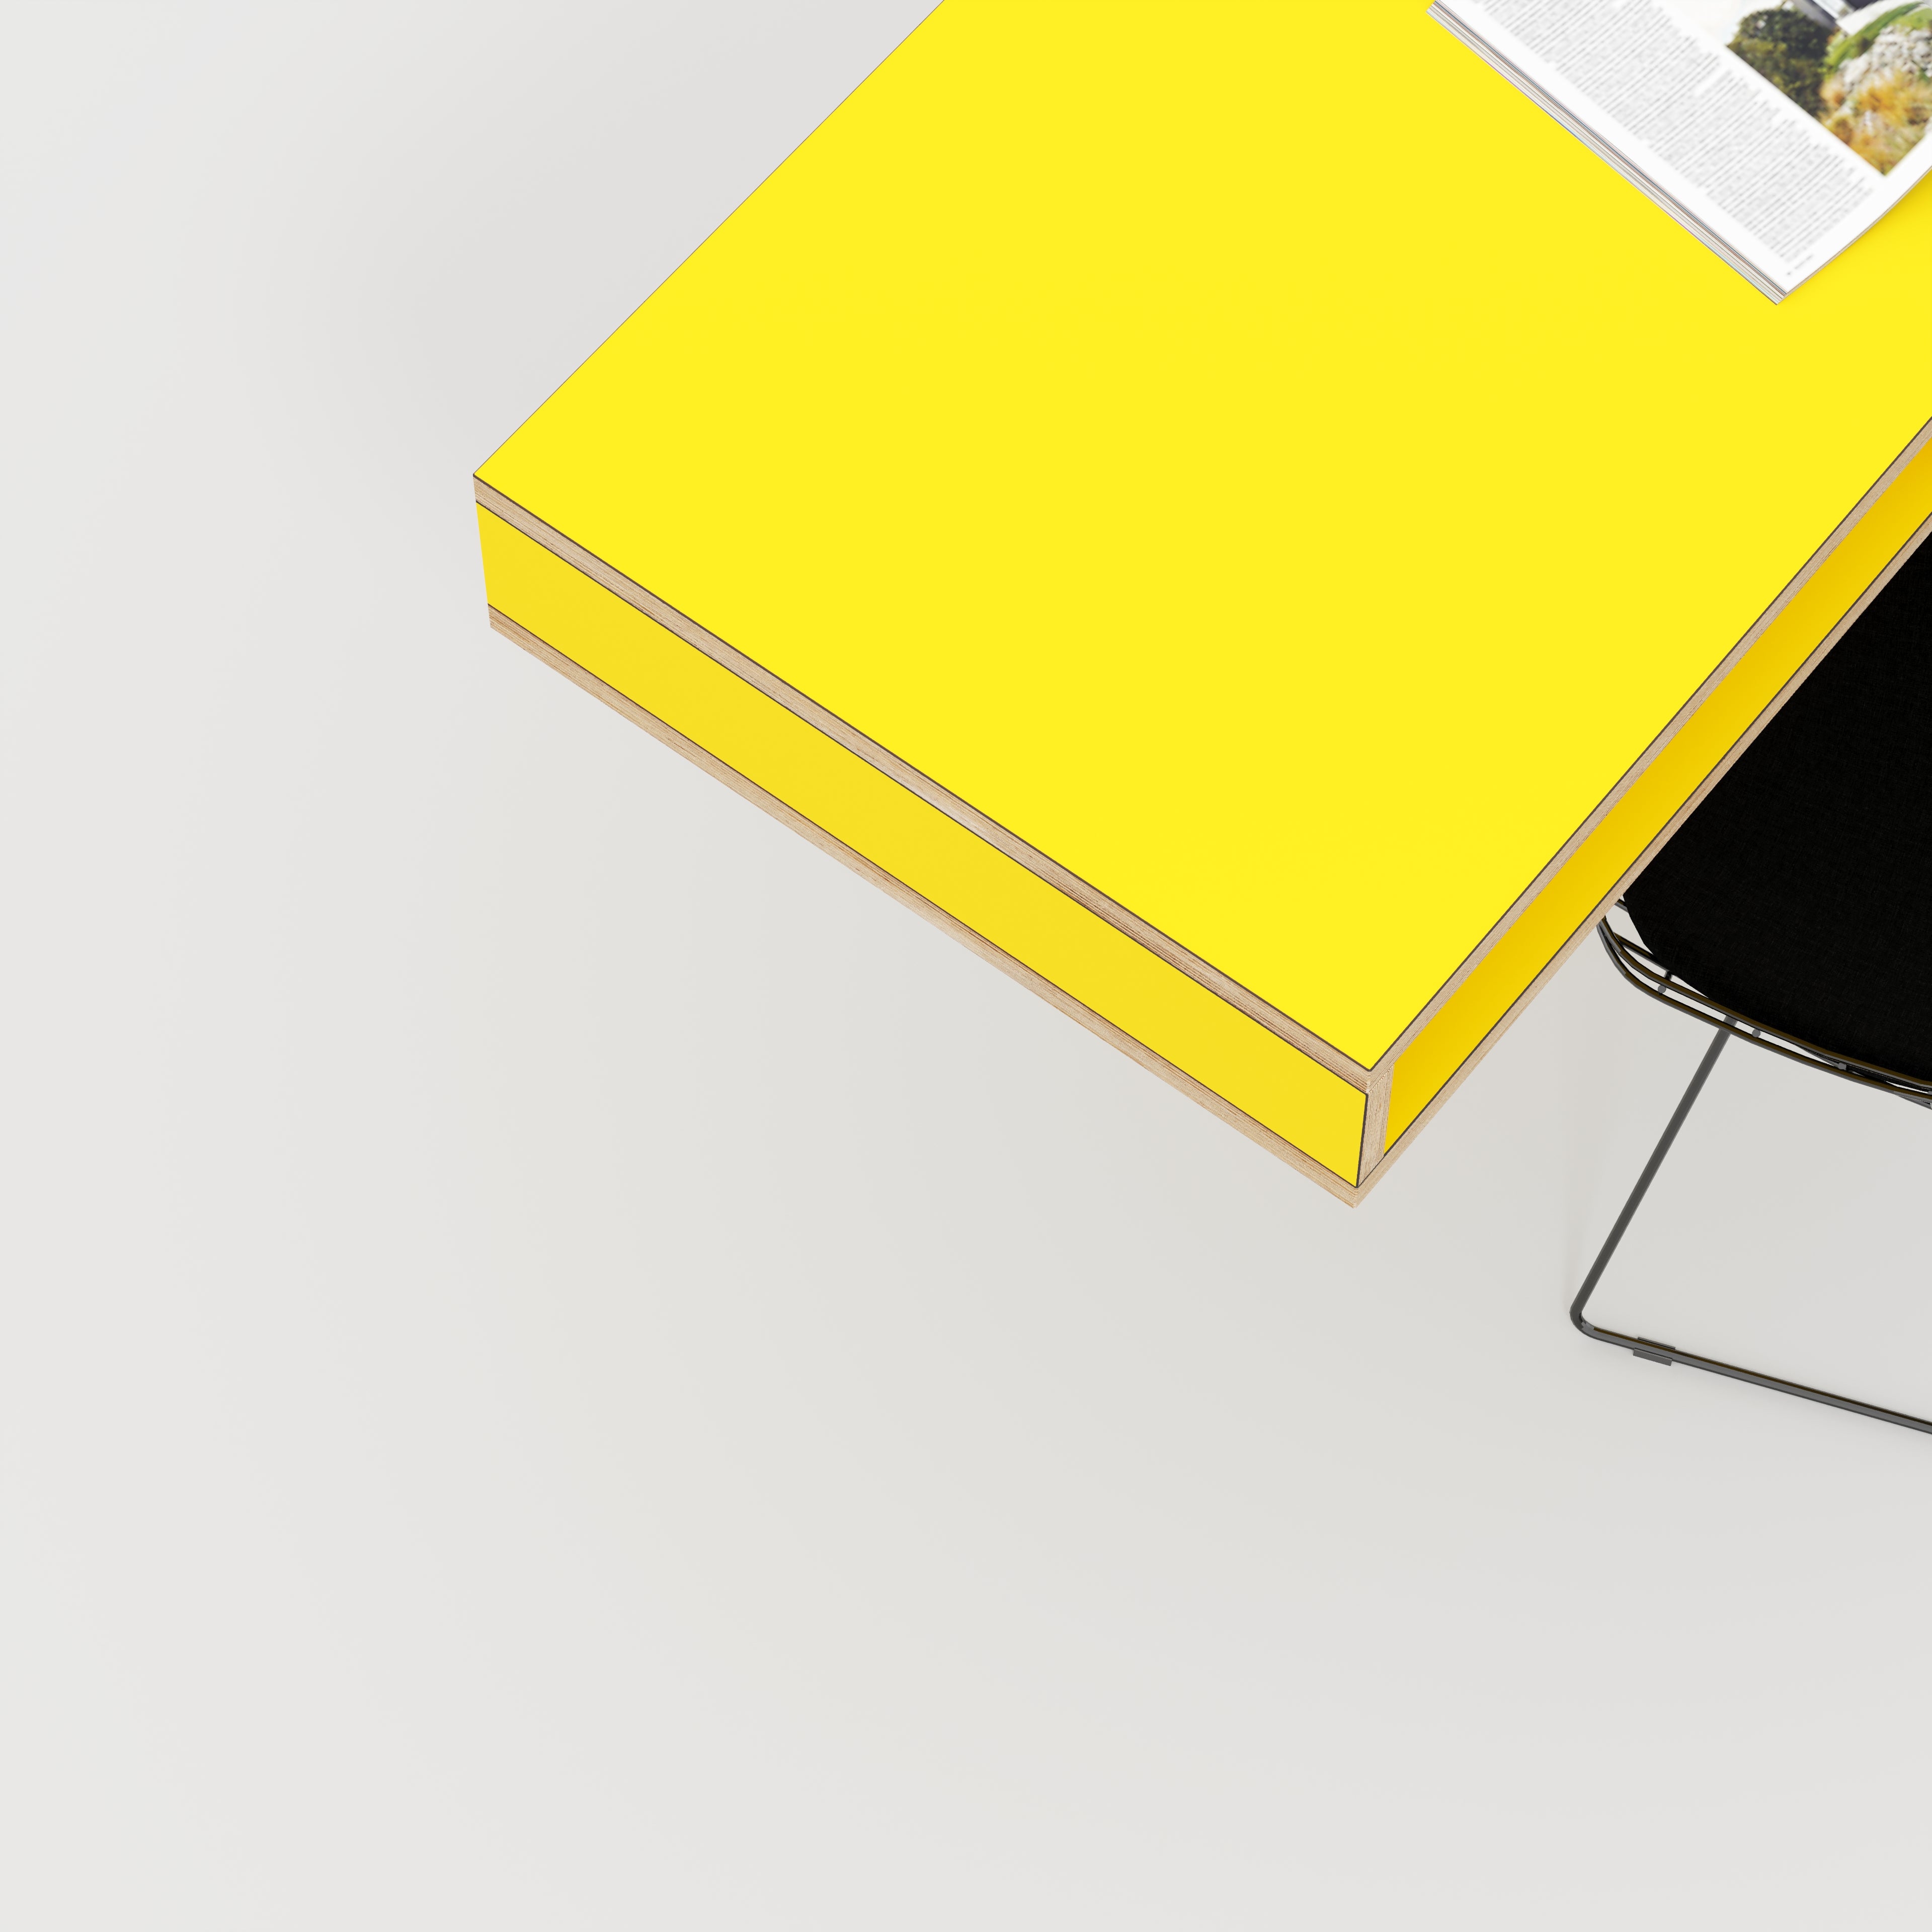 Plywood Desktop with Storage - Formica Chrome Yellow - 1200(w) x 600(d) x 150(h)